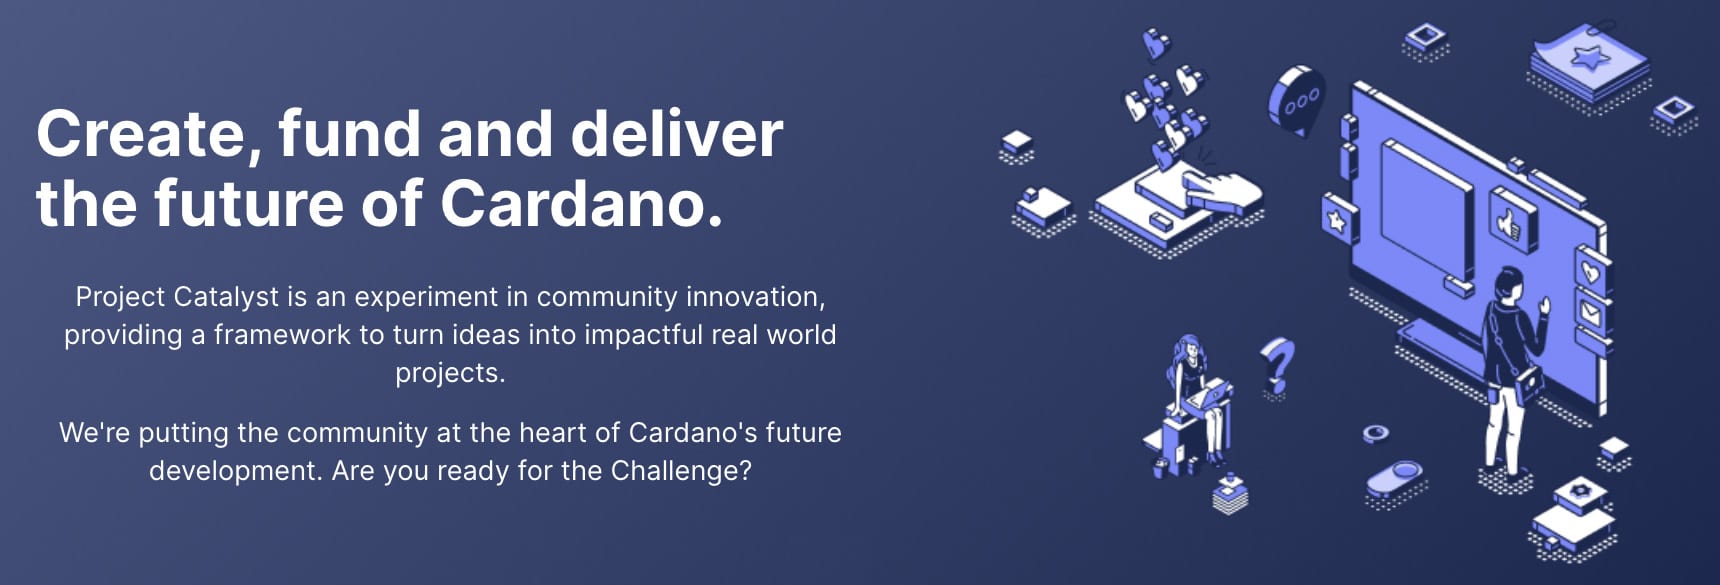 Project Catalyst Cardano